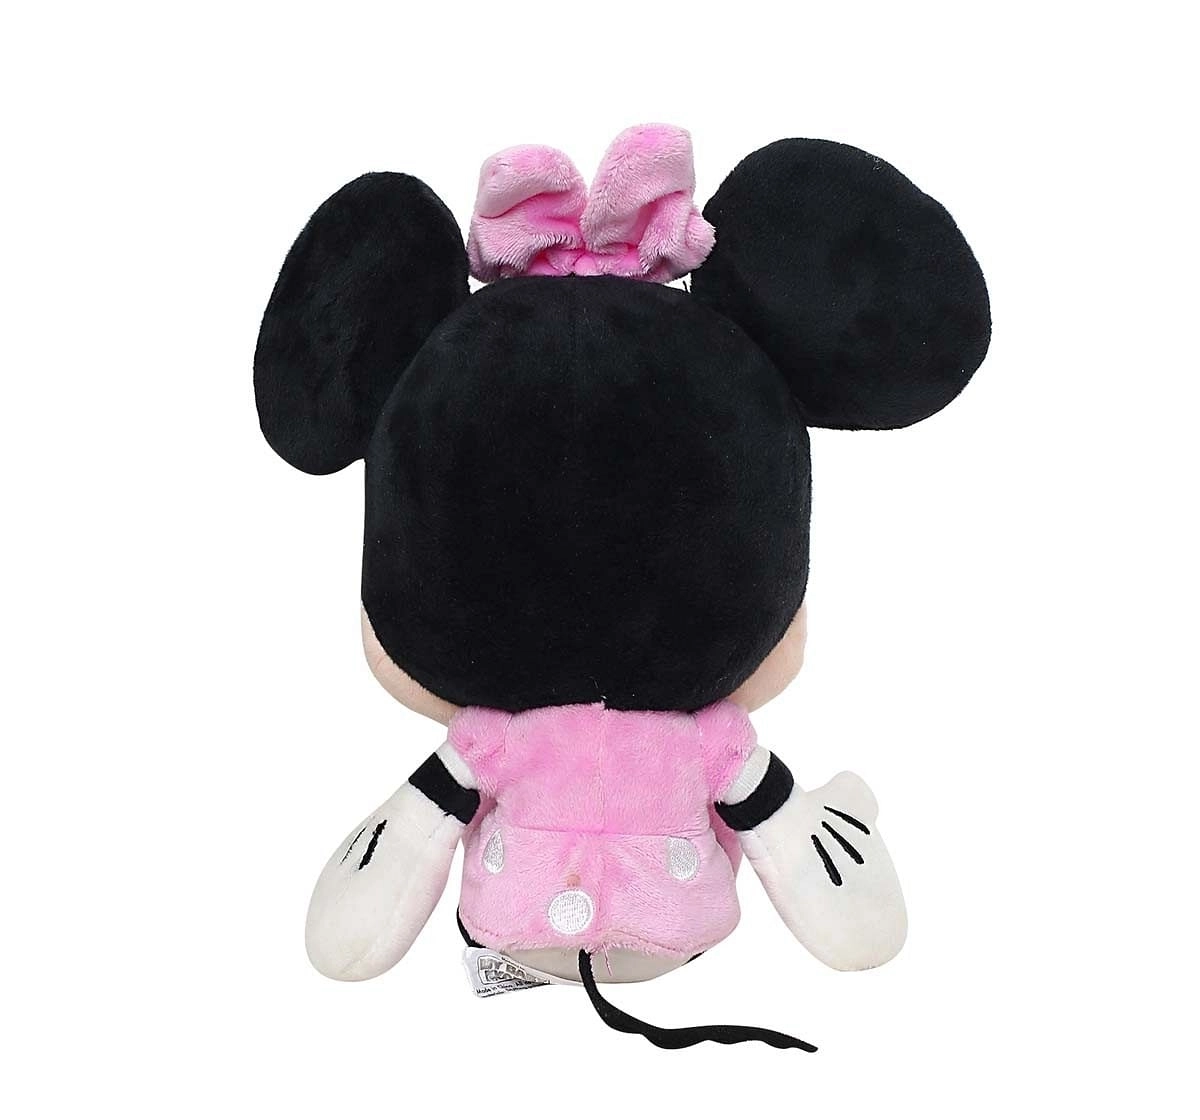 Disney Minnie Big Head, 10 Inch Character Soft Toys for Kids age 3Y+ 23 Cm 